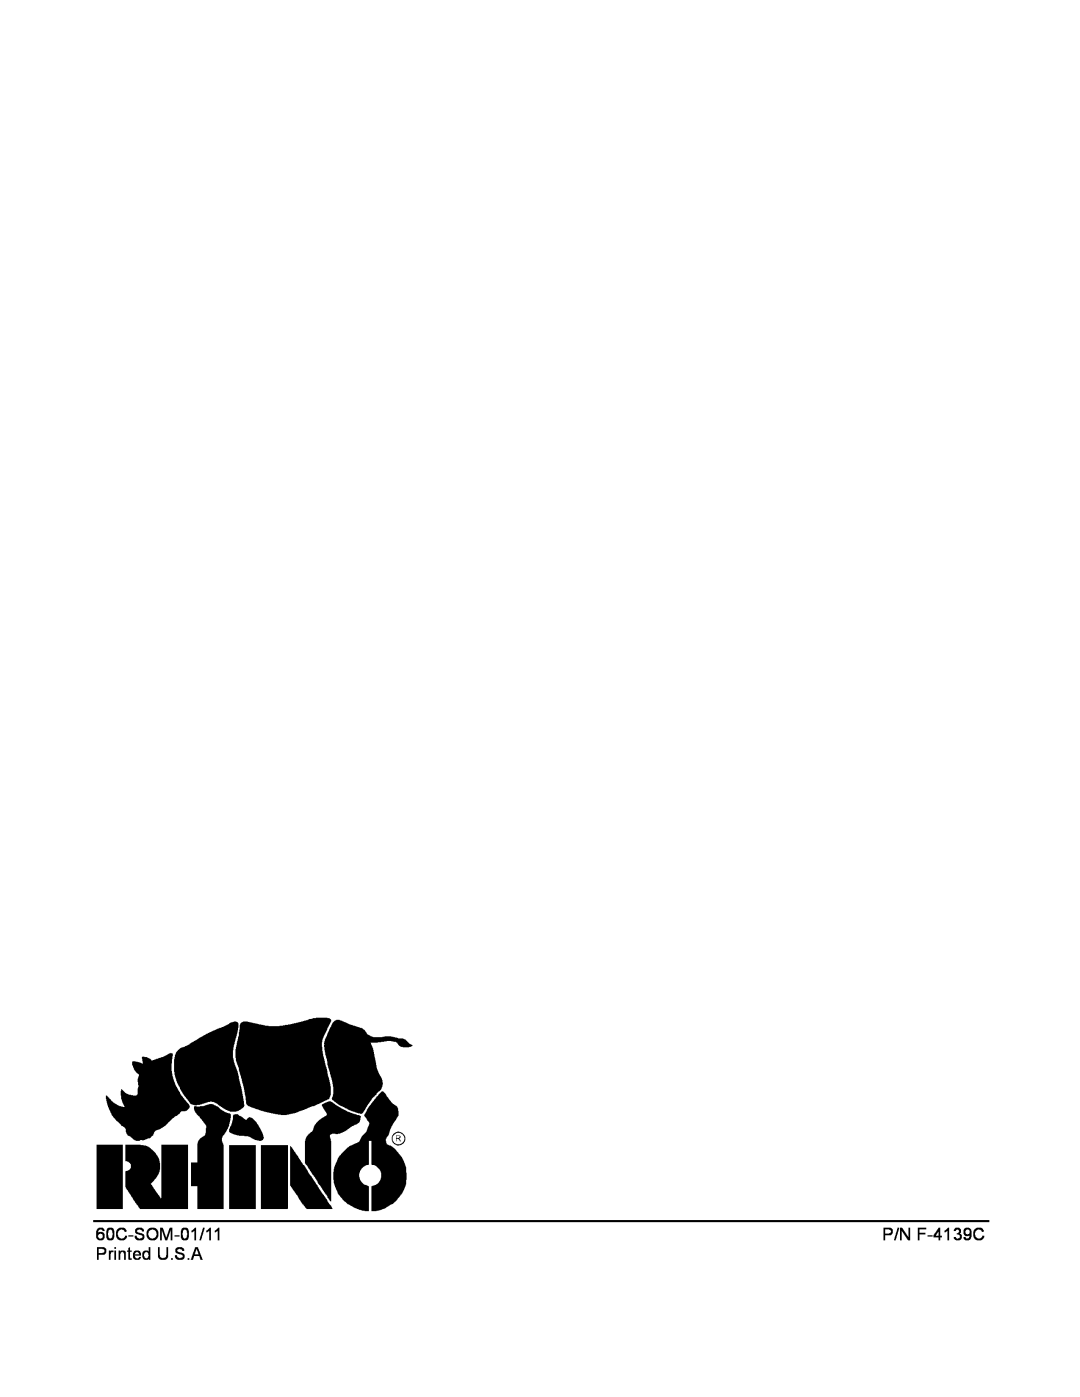 Servis-Rhino manual 60C-SOM-01/11, P/N F-4139C, Printed U.S.A 